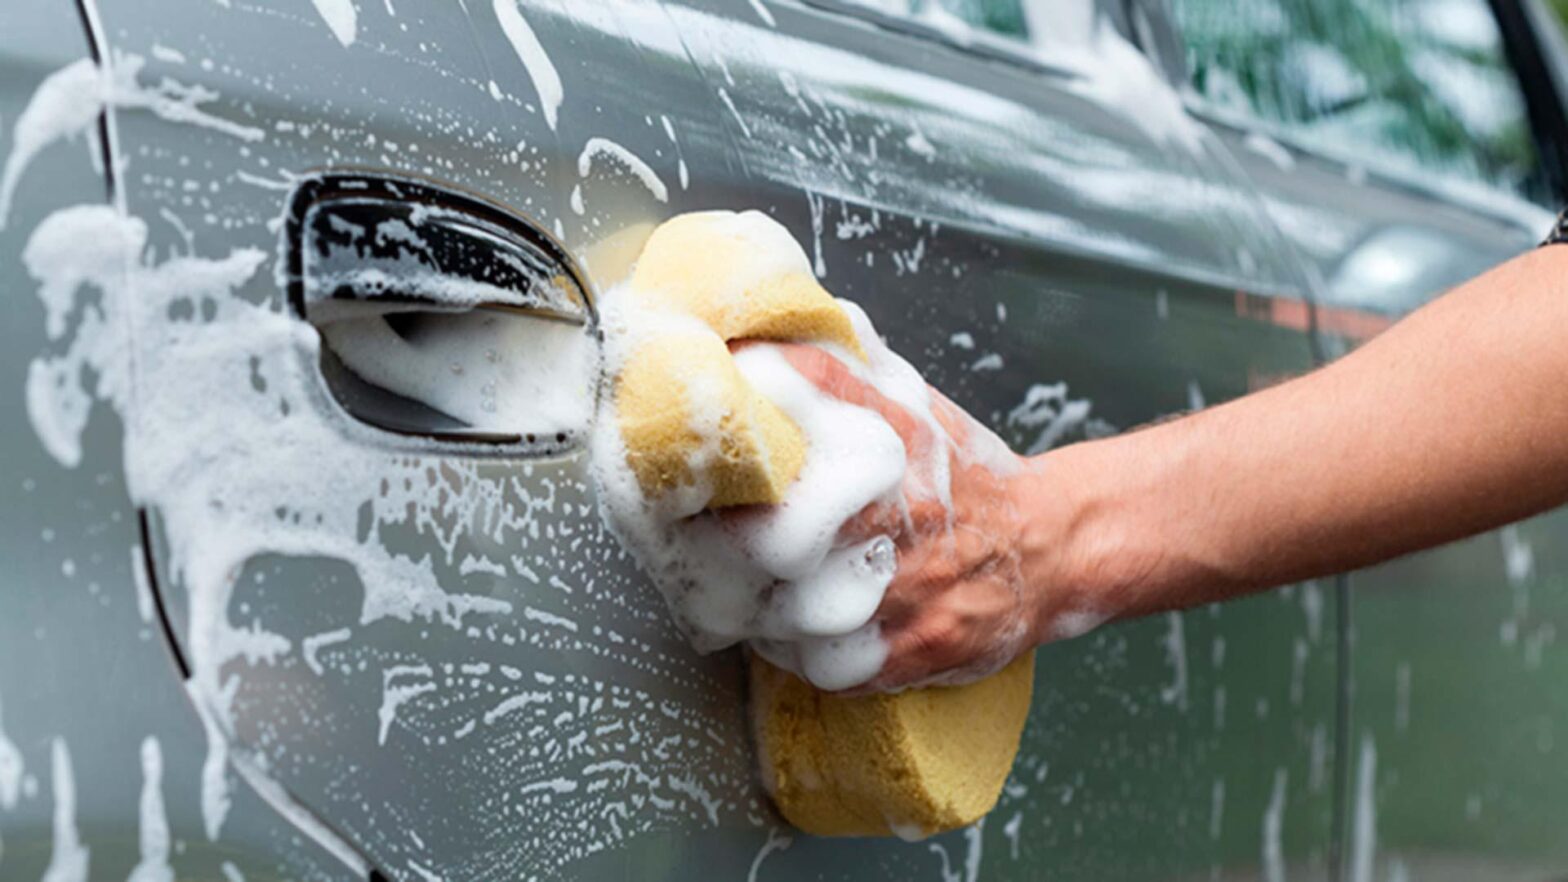 Car Wash Detergents and Soaps Market